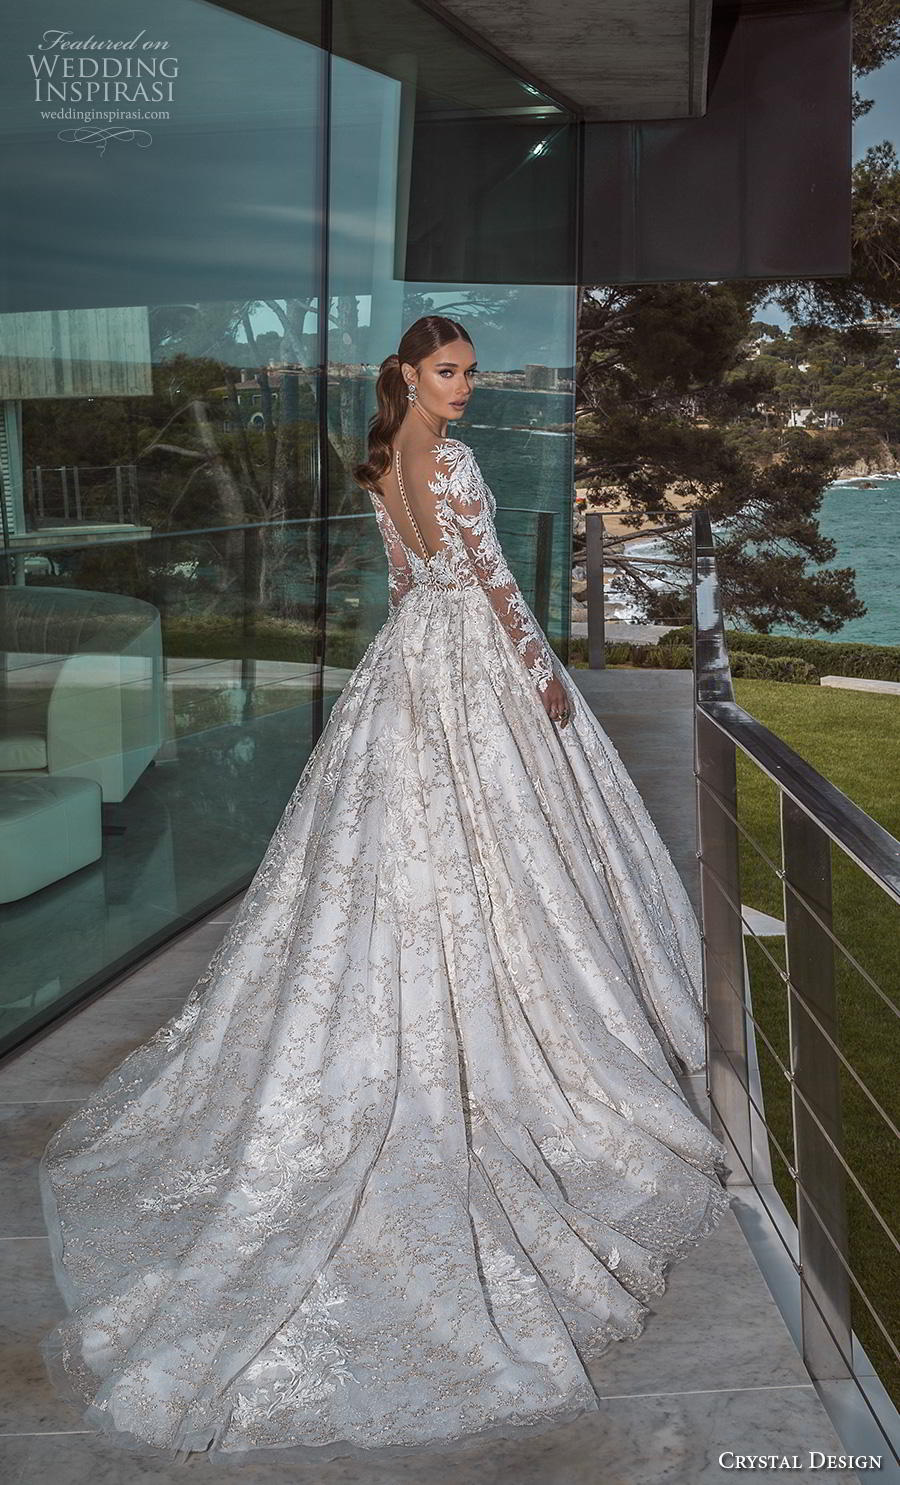 wedding dress designs for 2019